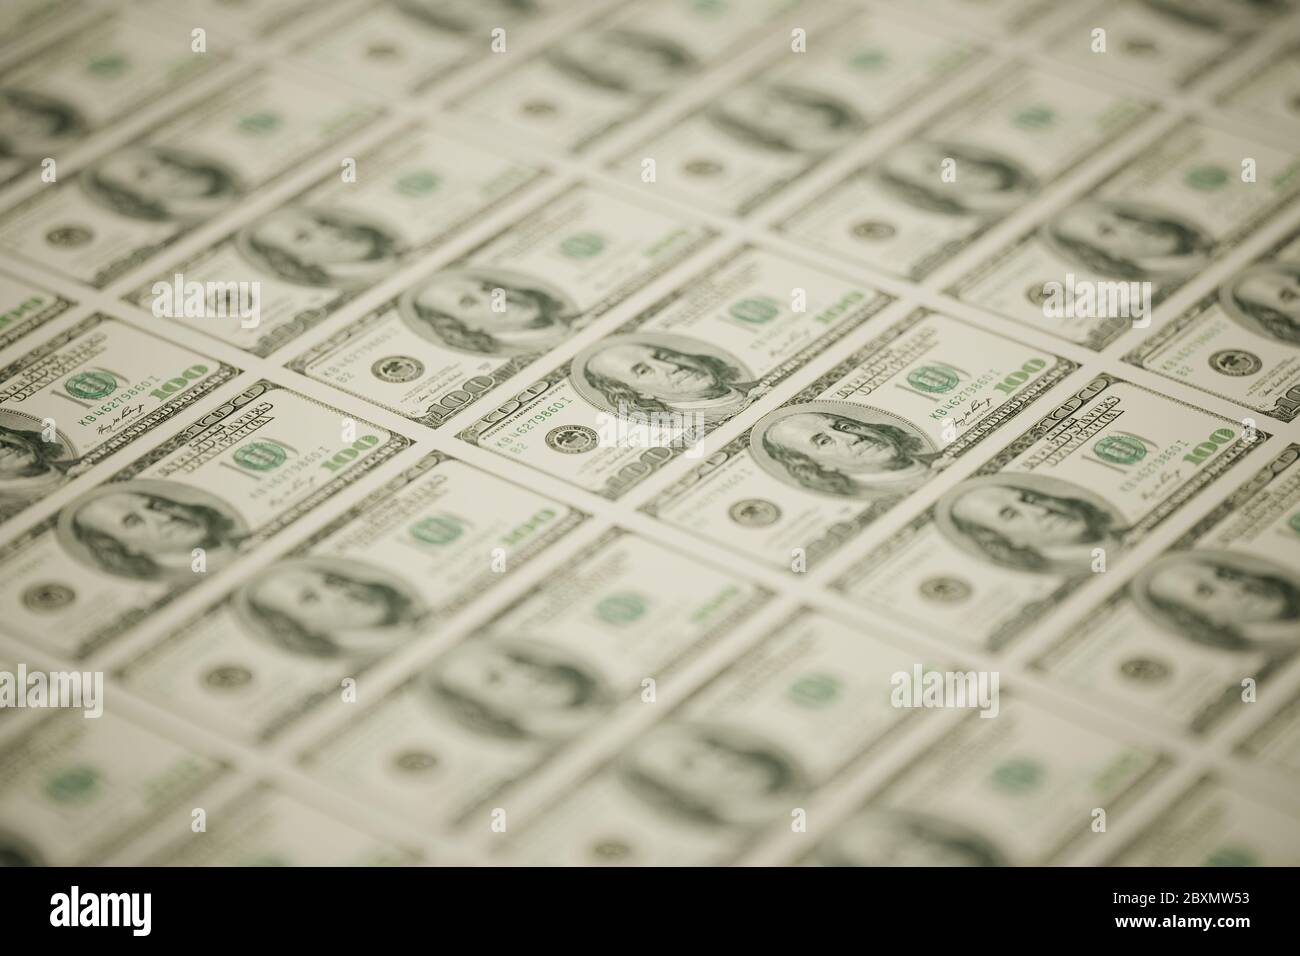 Money printing 100 dollar banknotes. 3d rendering illustration Stock Photo